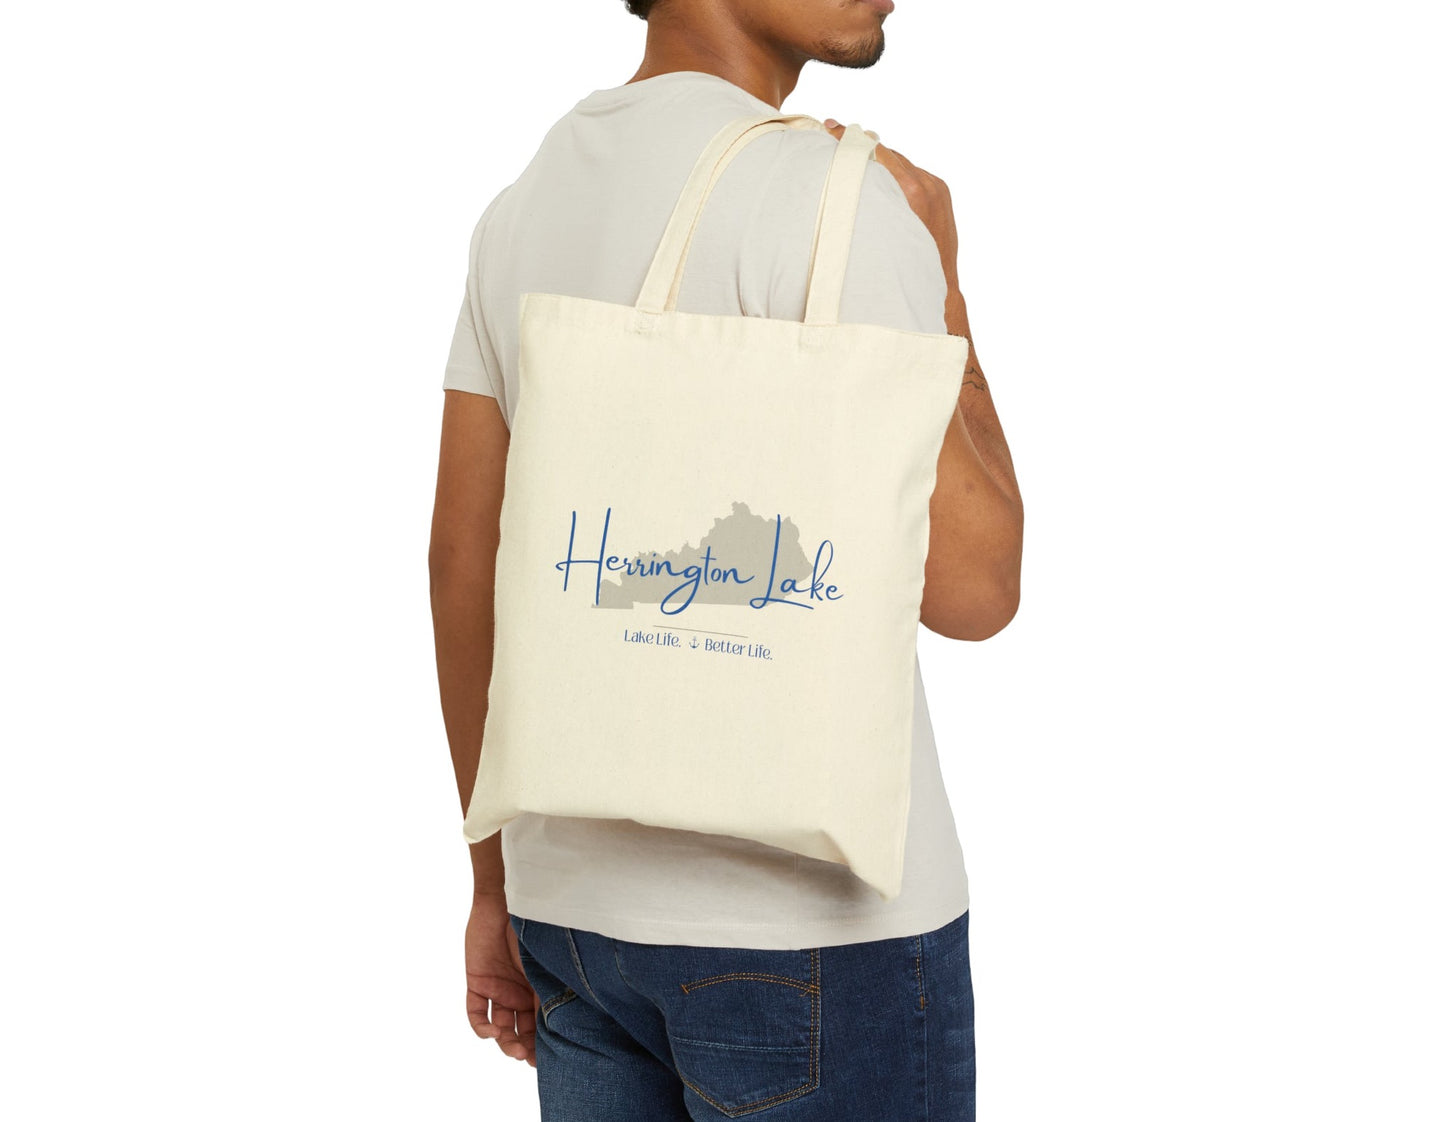 Herrington Lake Signature Collection Cotton Canvas Tote Bag